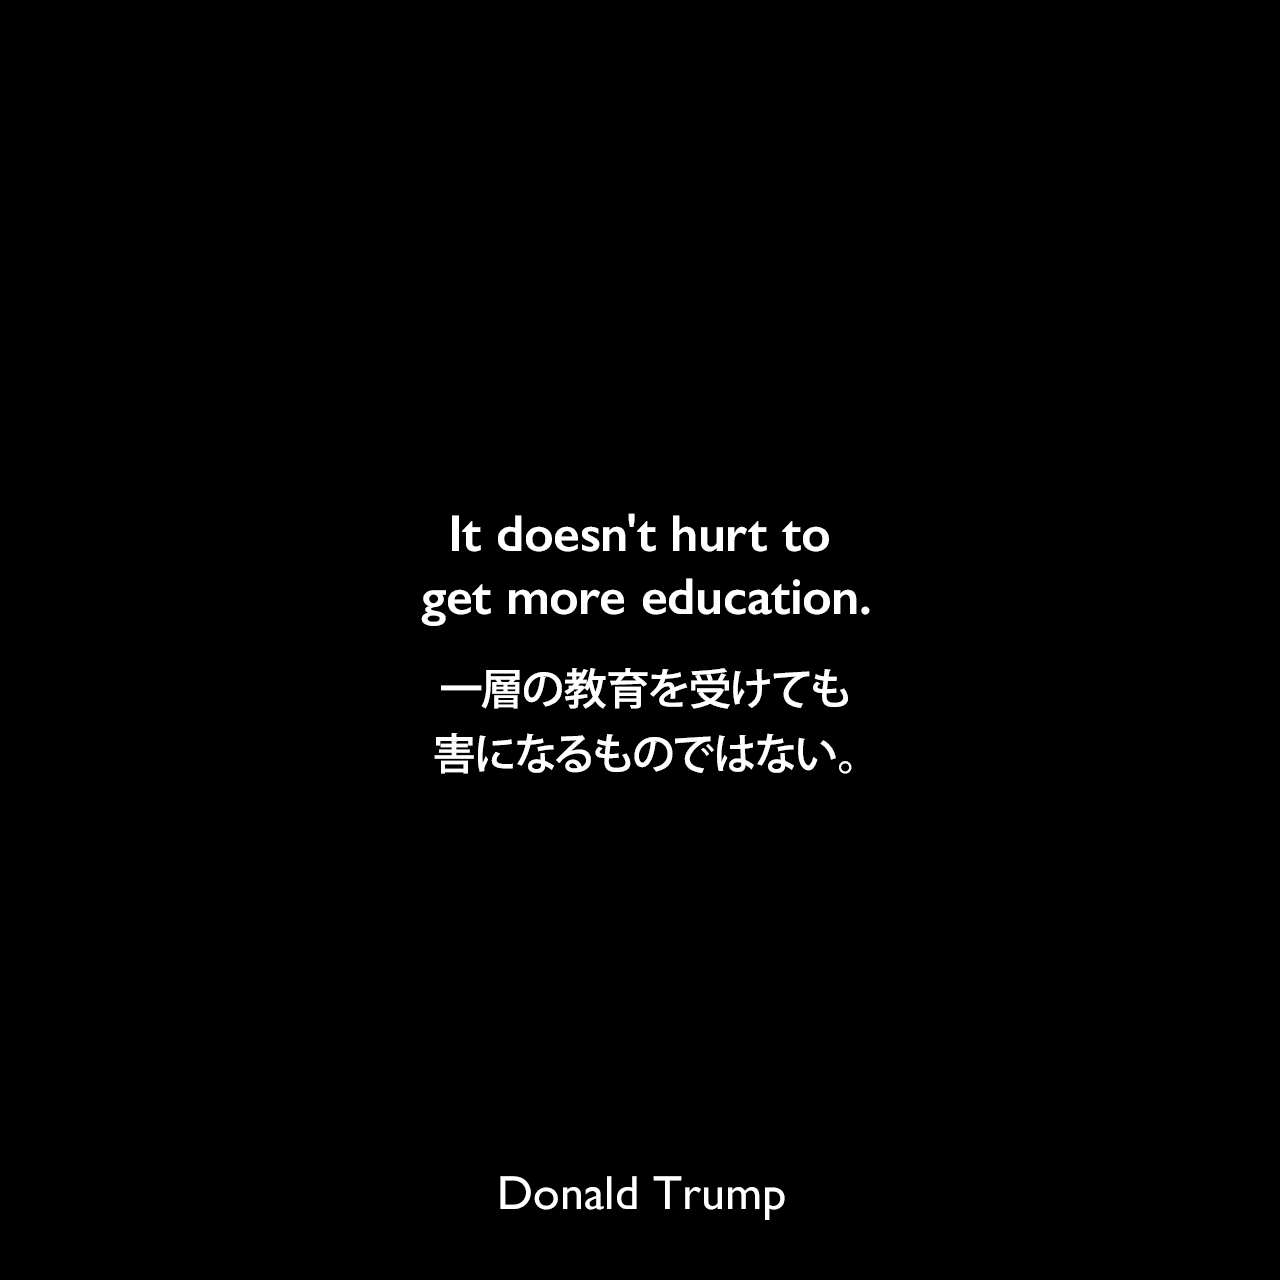 It doesn't hurt to get more education.一層の教育を受けても害になるものではない。Donald Trump